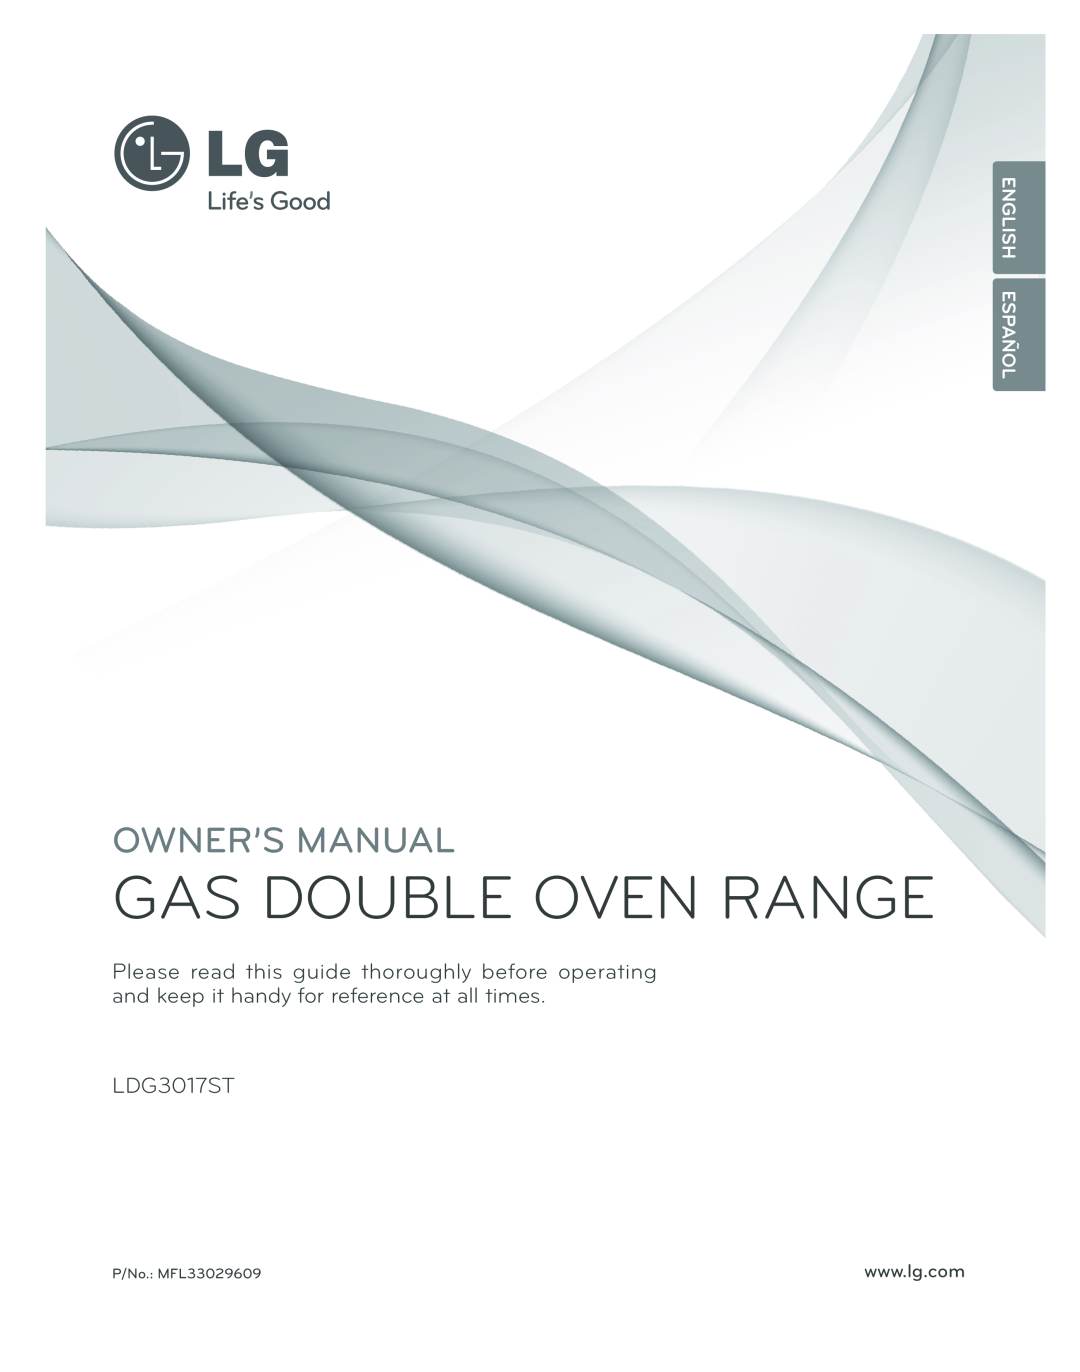 LG Electronics LDG3017ST owner manual Gas Double Oven Range, Owner’S Manual, English Español, P/No. MFL33029609 